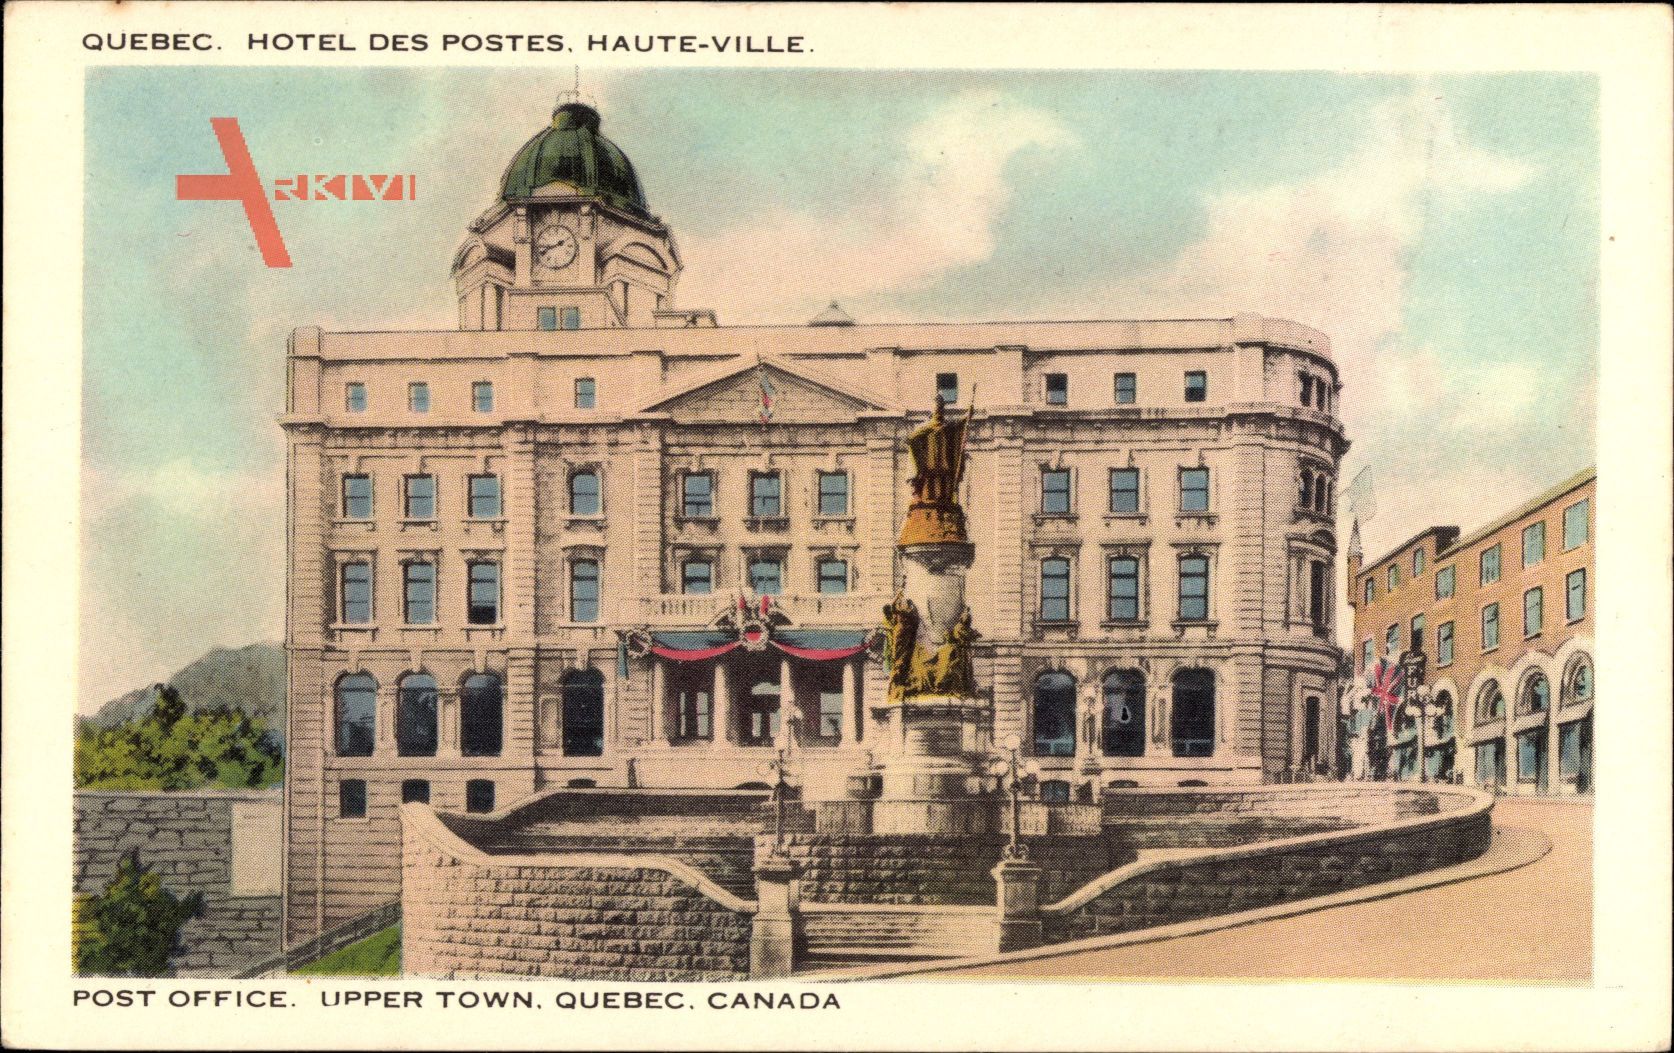 Quebec Kanada, Hotel des Postes, Haute Ville, Post Office, Upper Town